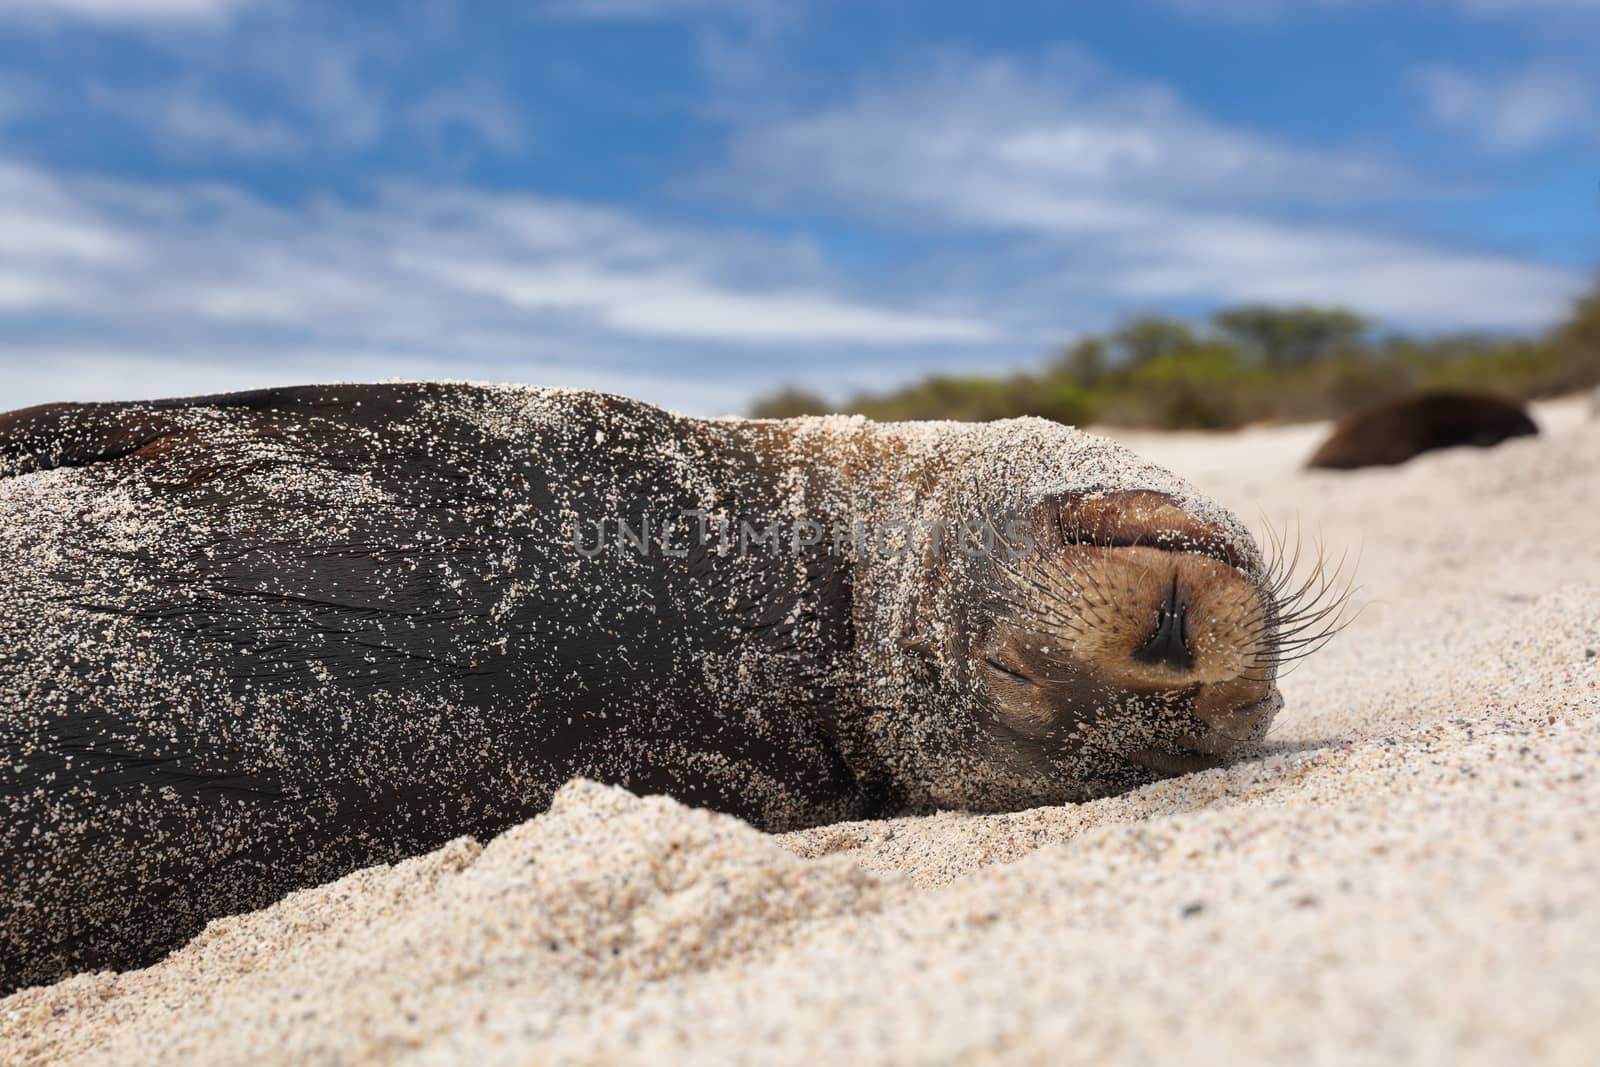 Galapagos Sea Lion in sand lying on beach by Maridav